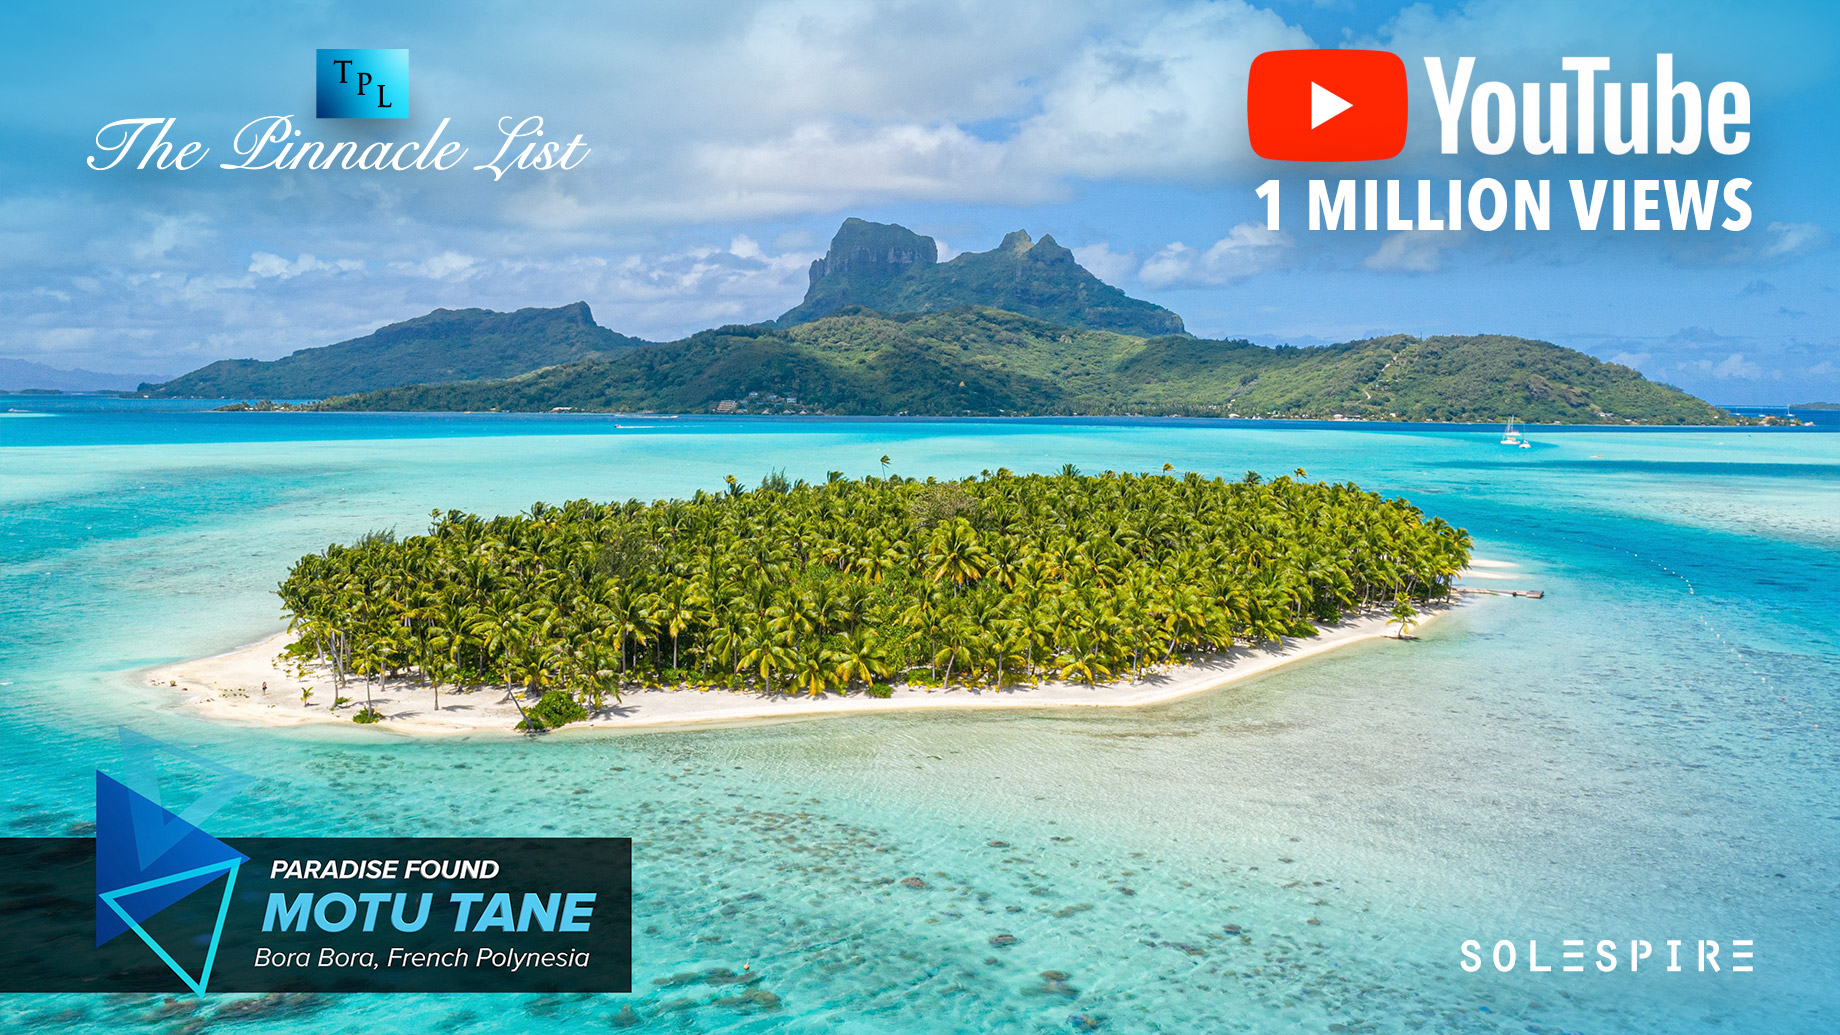 Motu Tane Video Achieves 1 Million Views on The Pinnacle List YouTube Channel